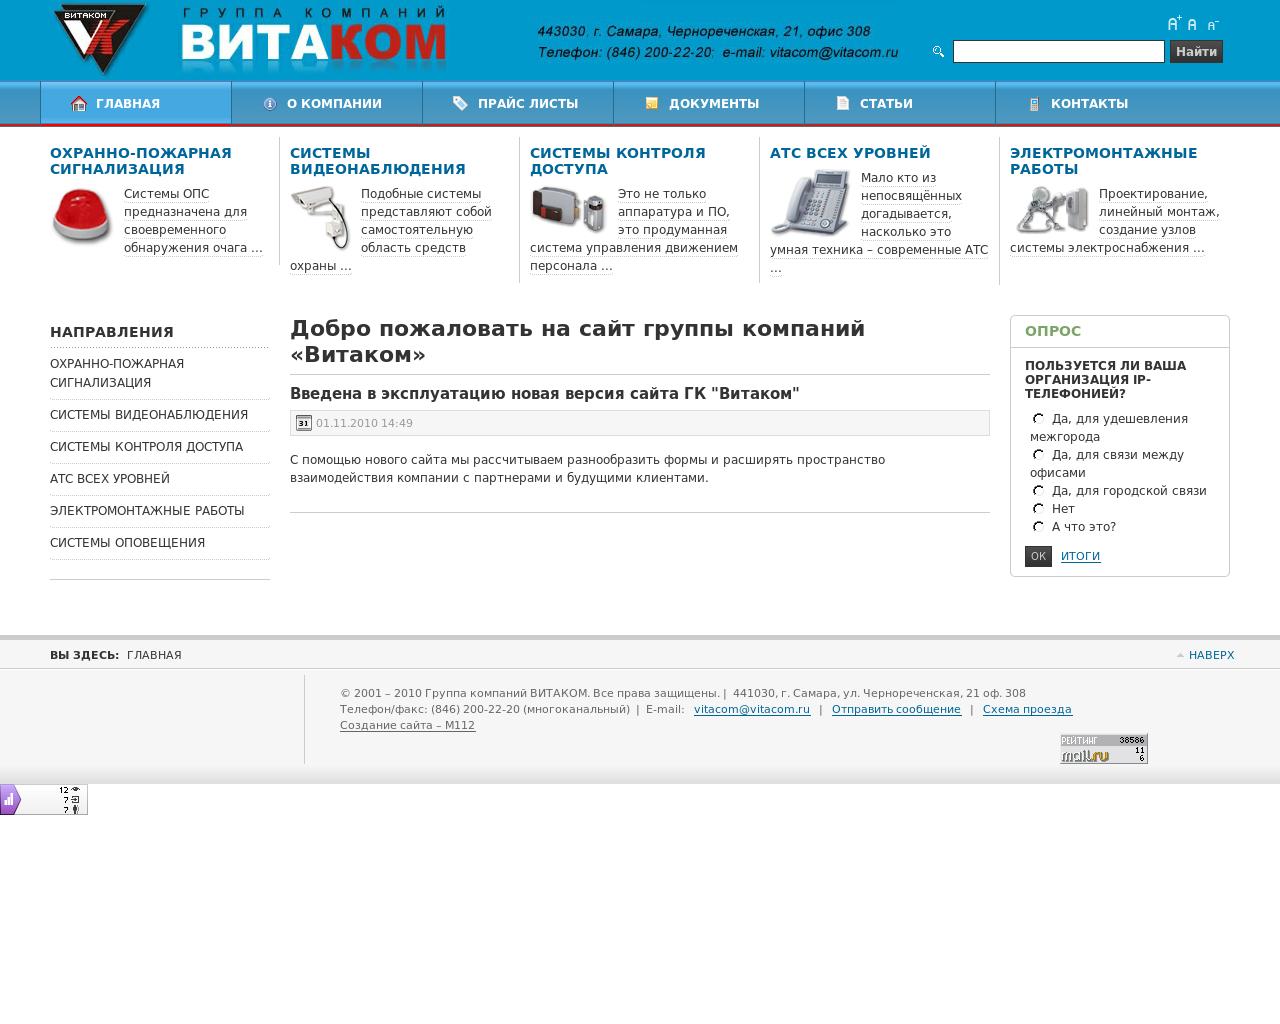 Изображение сайта vitacom.ru в разрешении 1280x1024